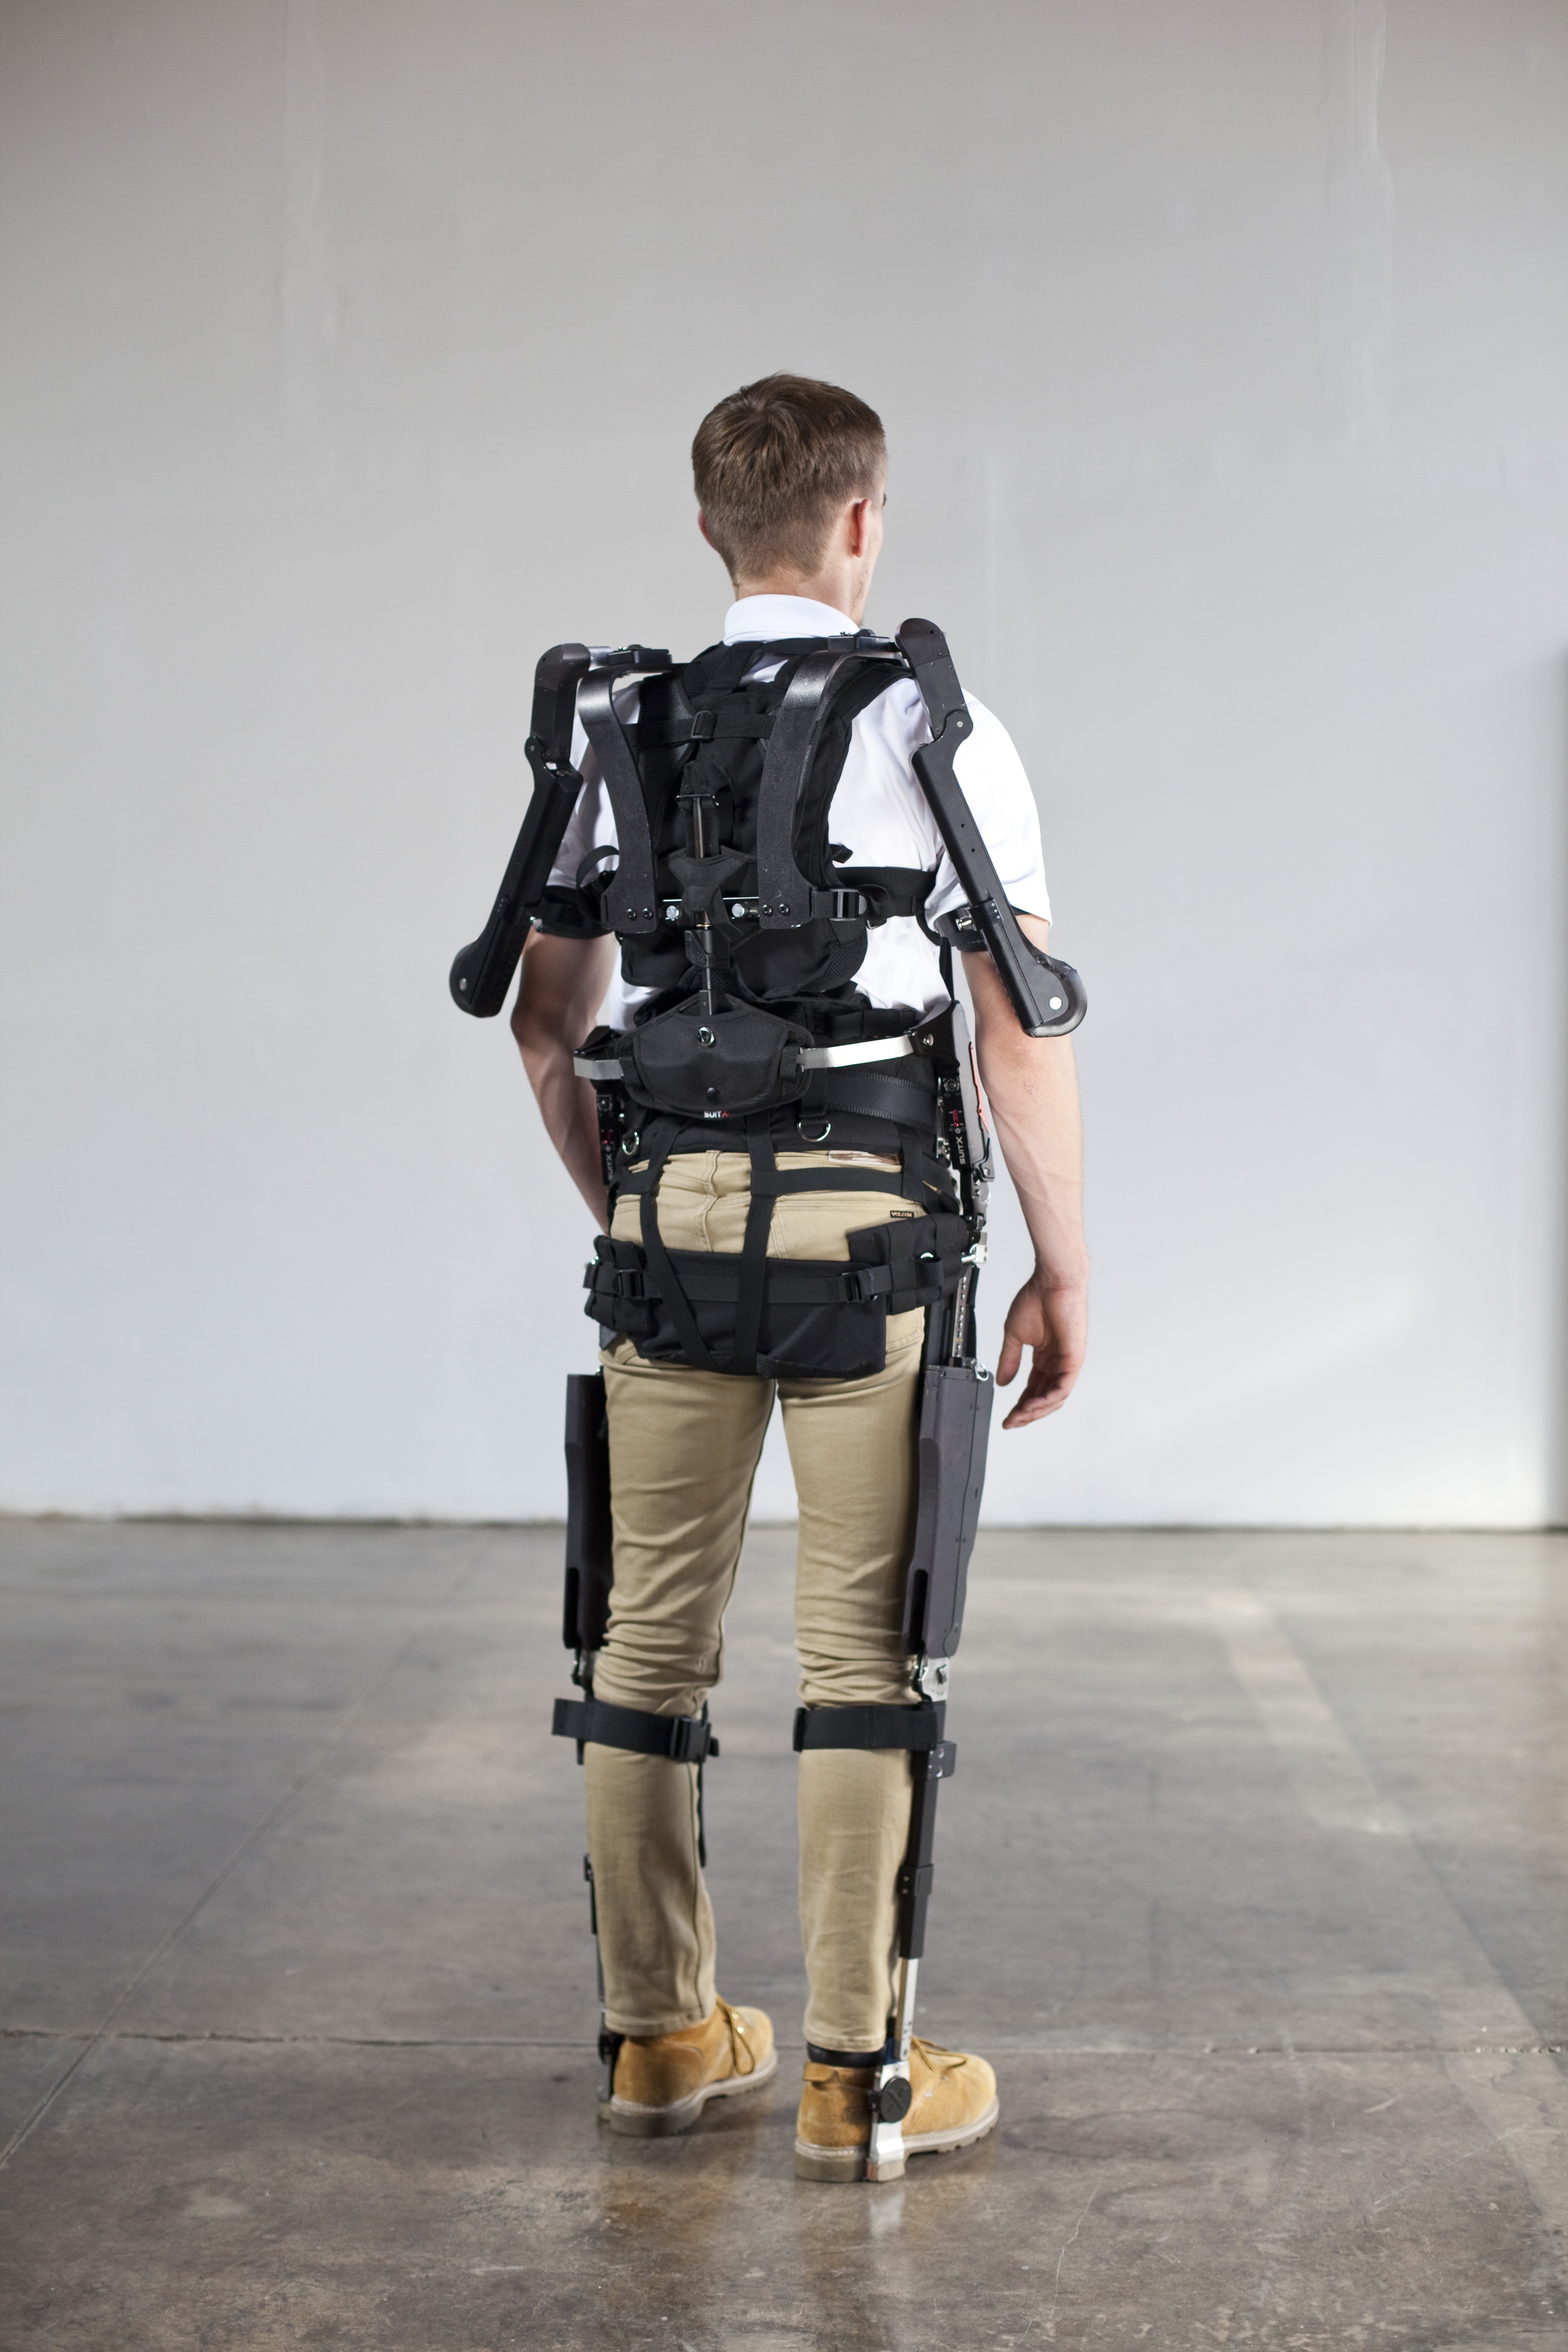 suitX Unveils Affordable Modular Industrial Exoskeleton  